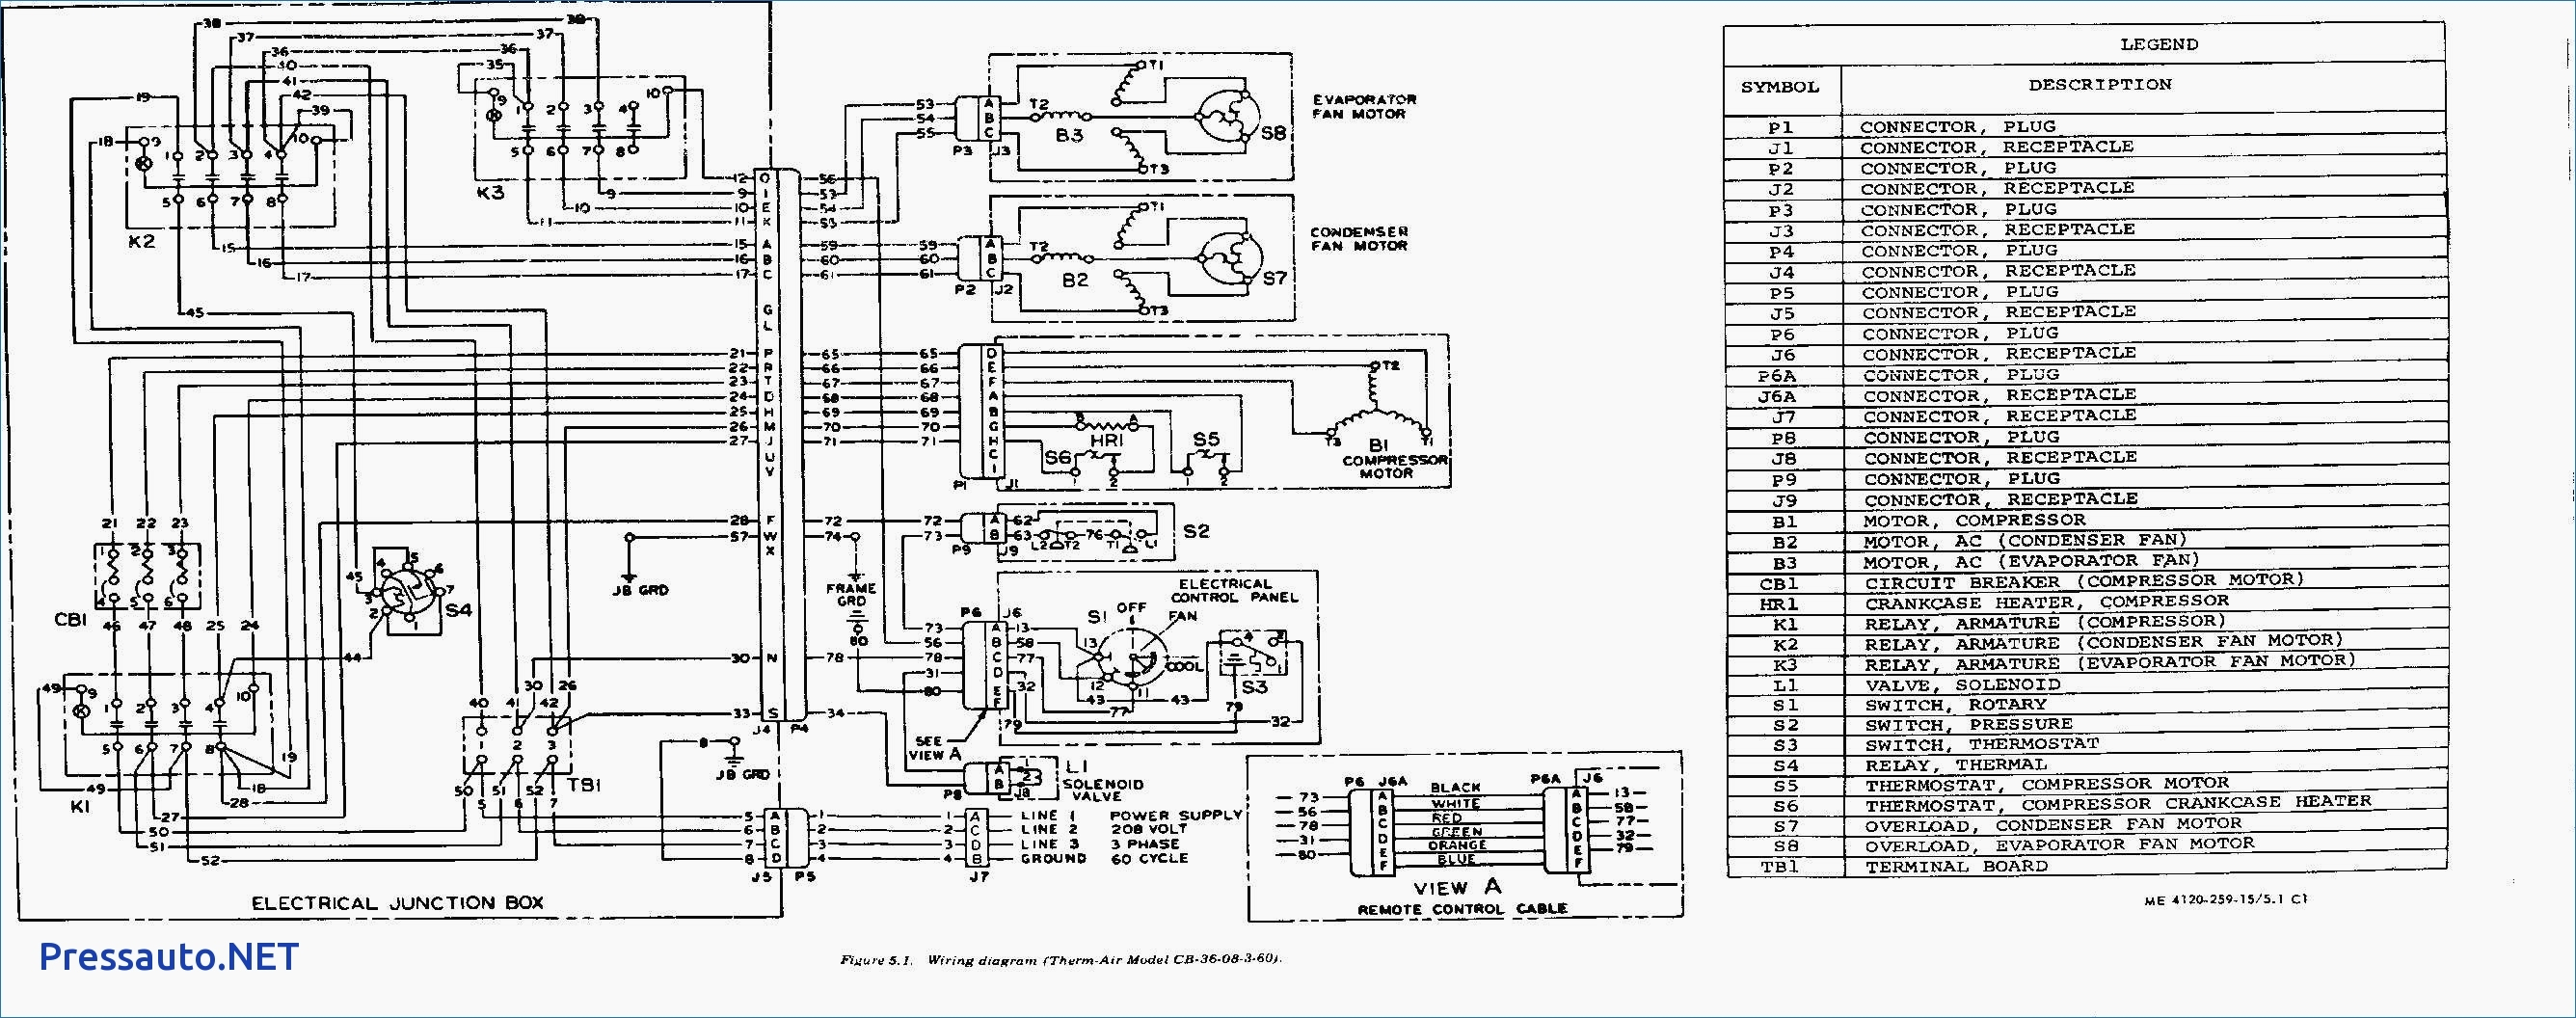 Curtis Controller Wiring Diagram 48 Volt Golf Cart | Manual E-Books - 48 Volt Golf Cart Wiring Diagram